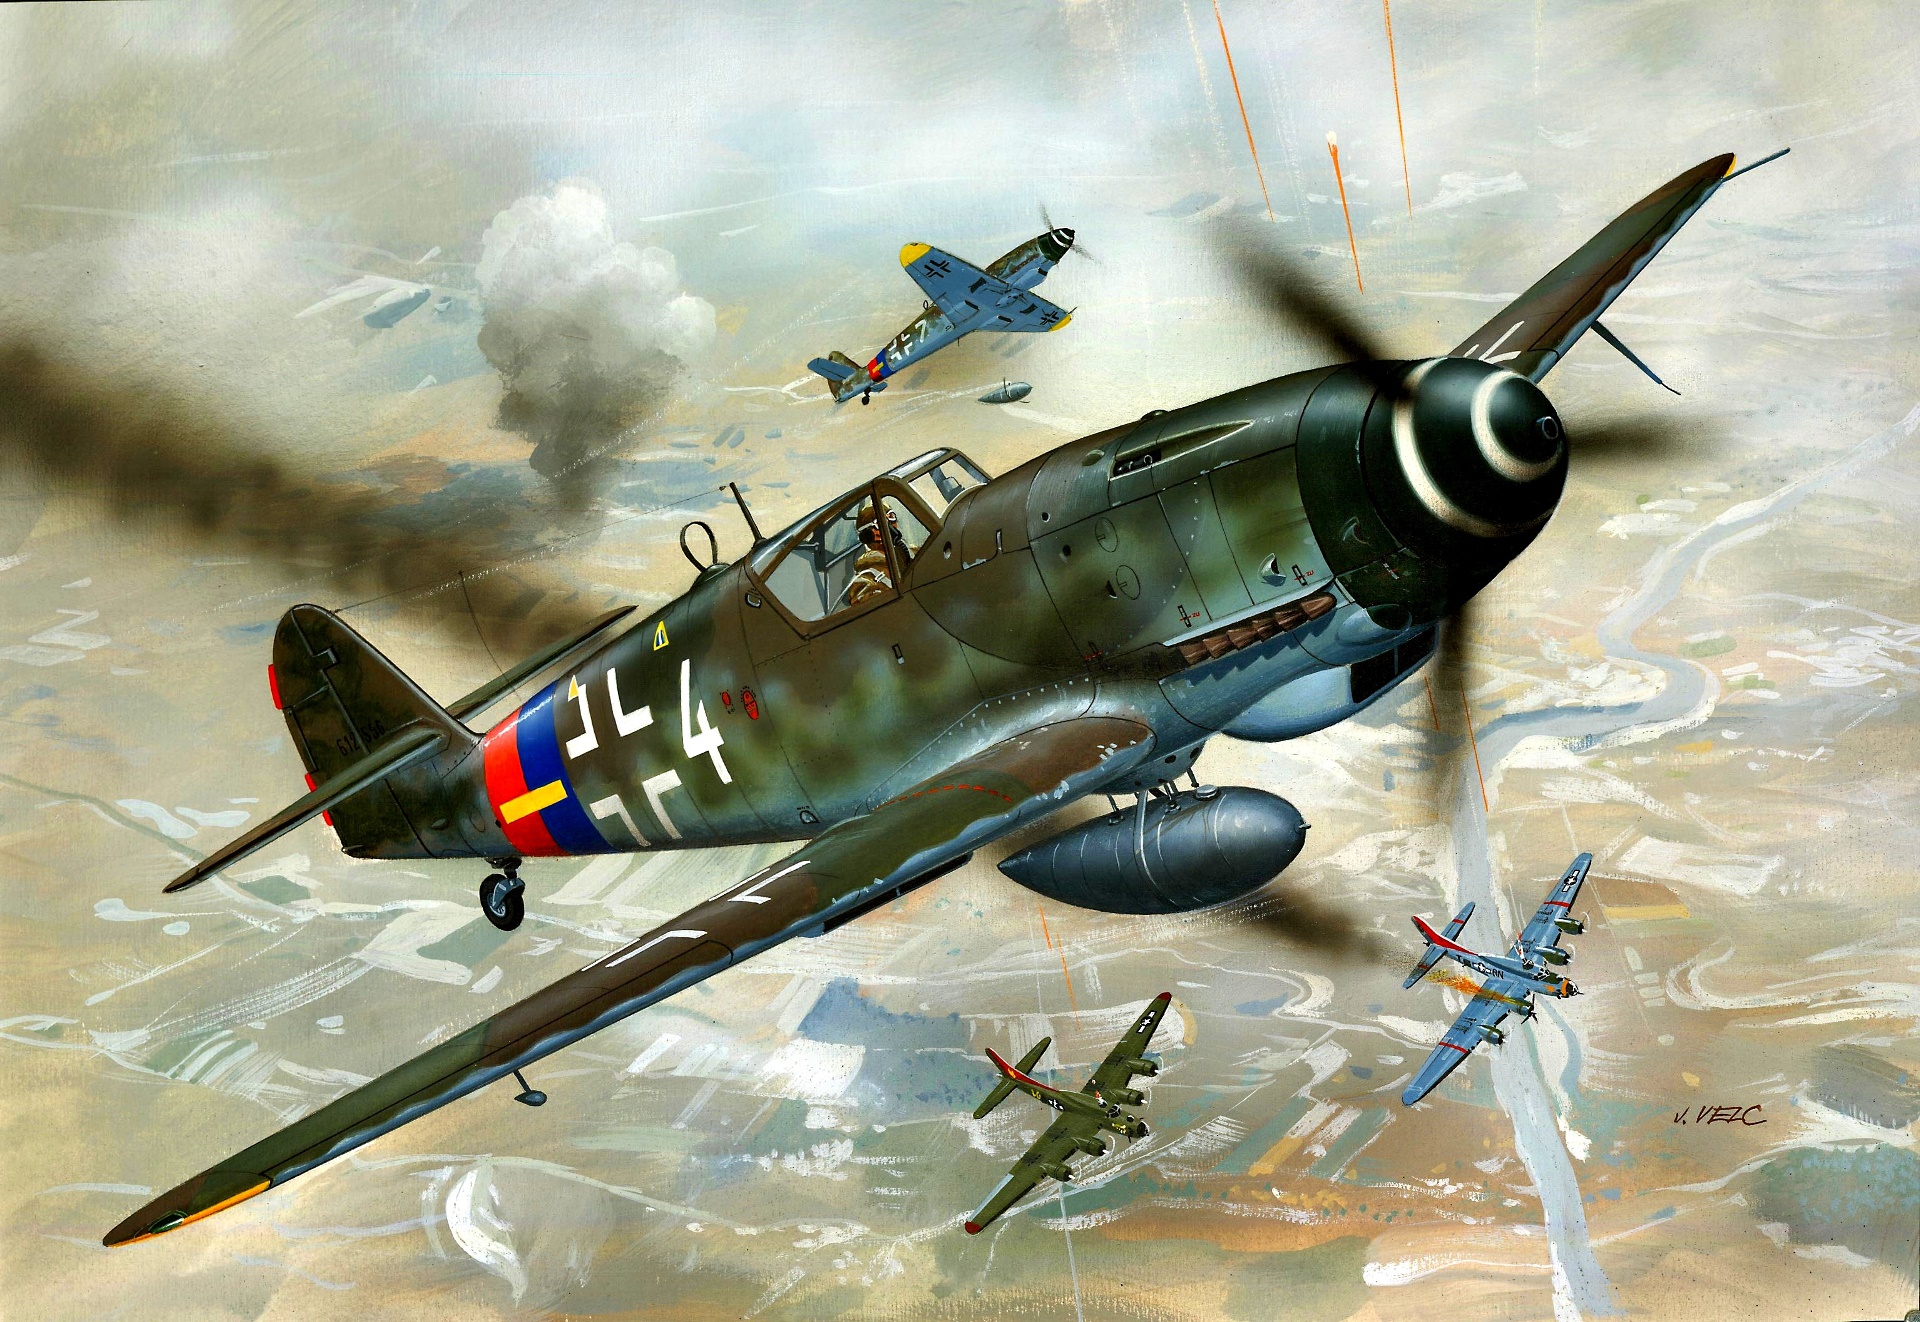 General 1920x1322 military war aircraft artwork military aircraft World War II German aircraft